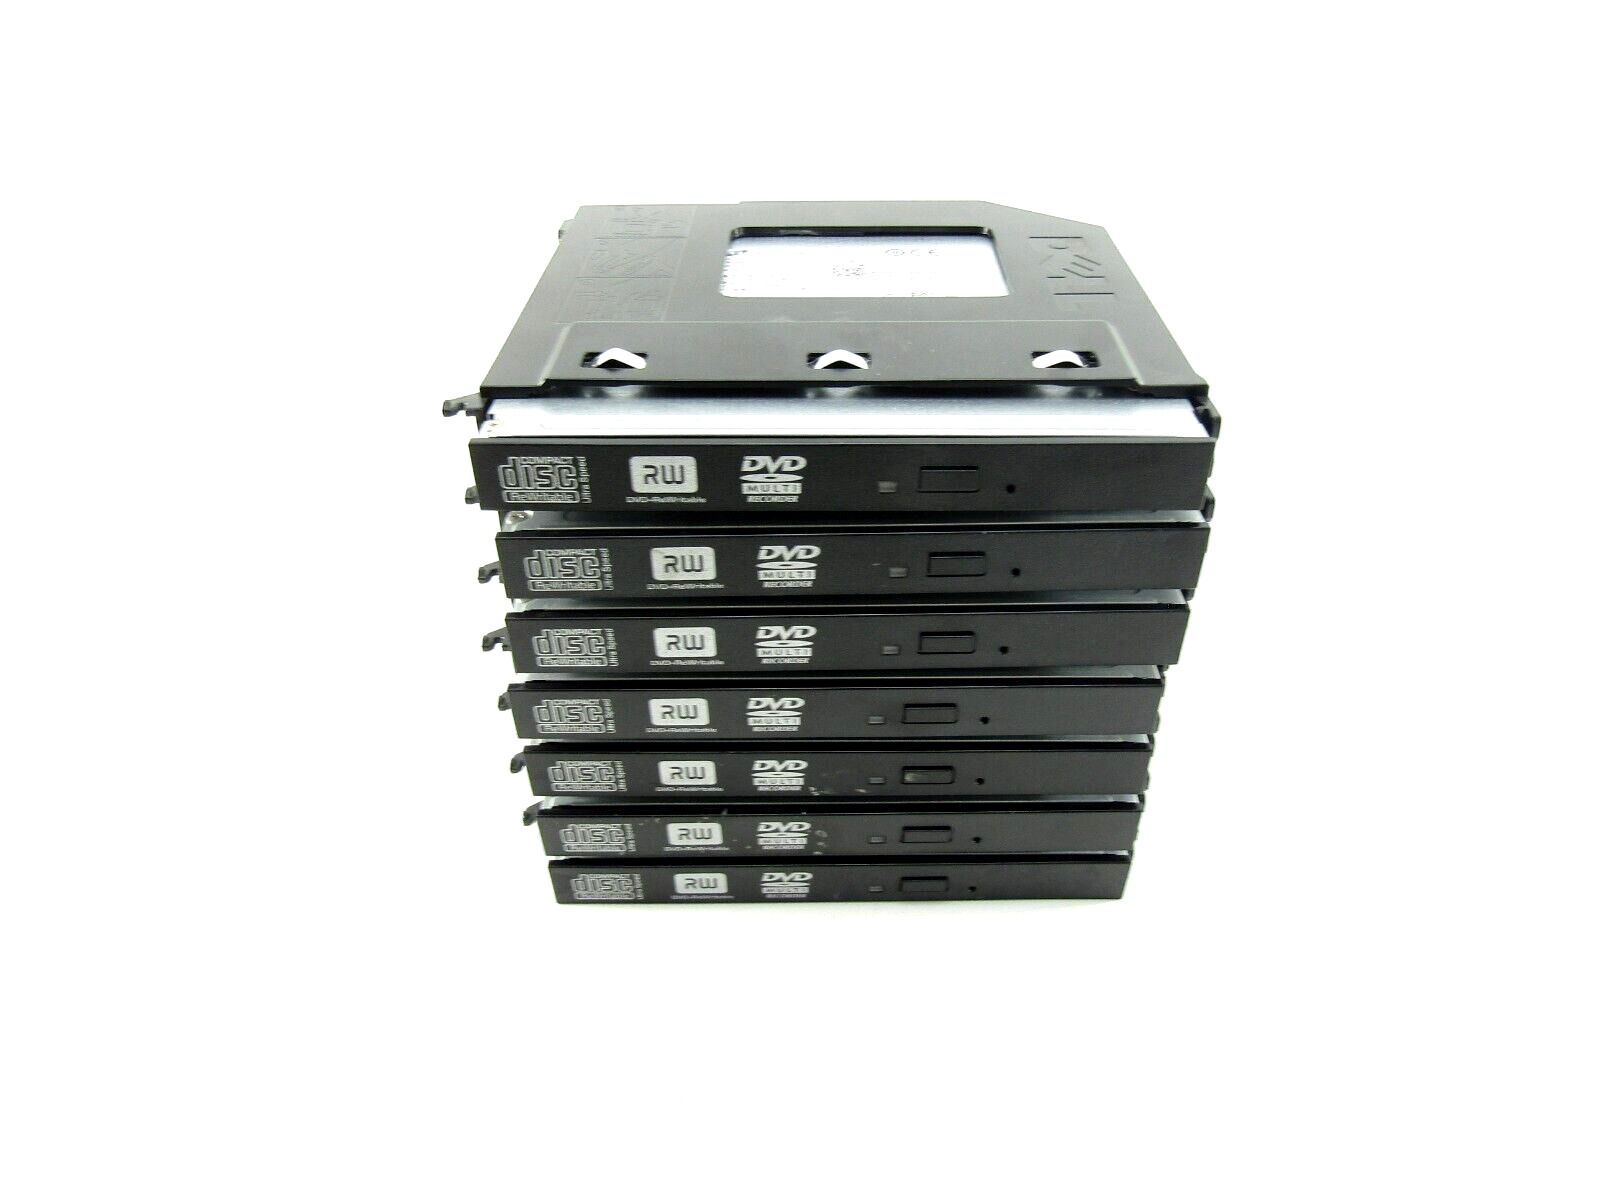 Lot of 7 Hitachi-LG Data Storage GTA0N Super Multi DVD Writers - Dell P/N V3171